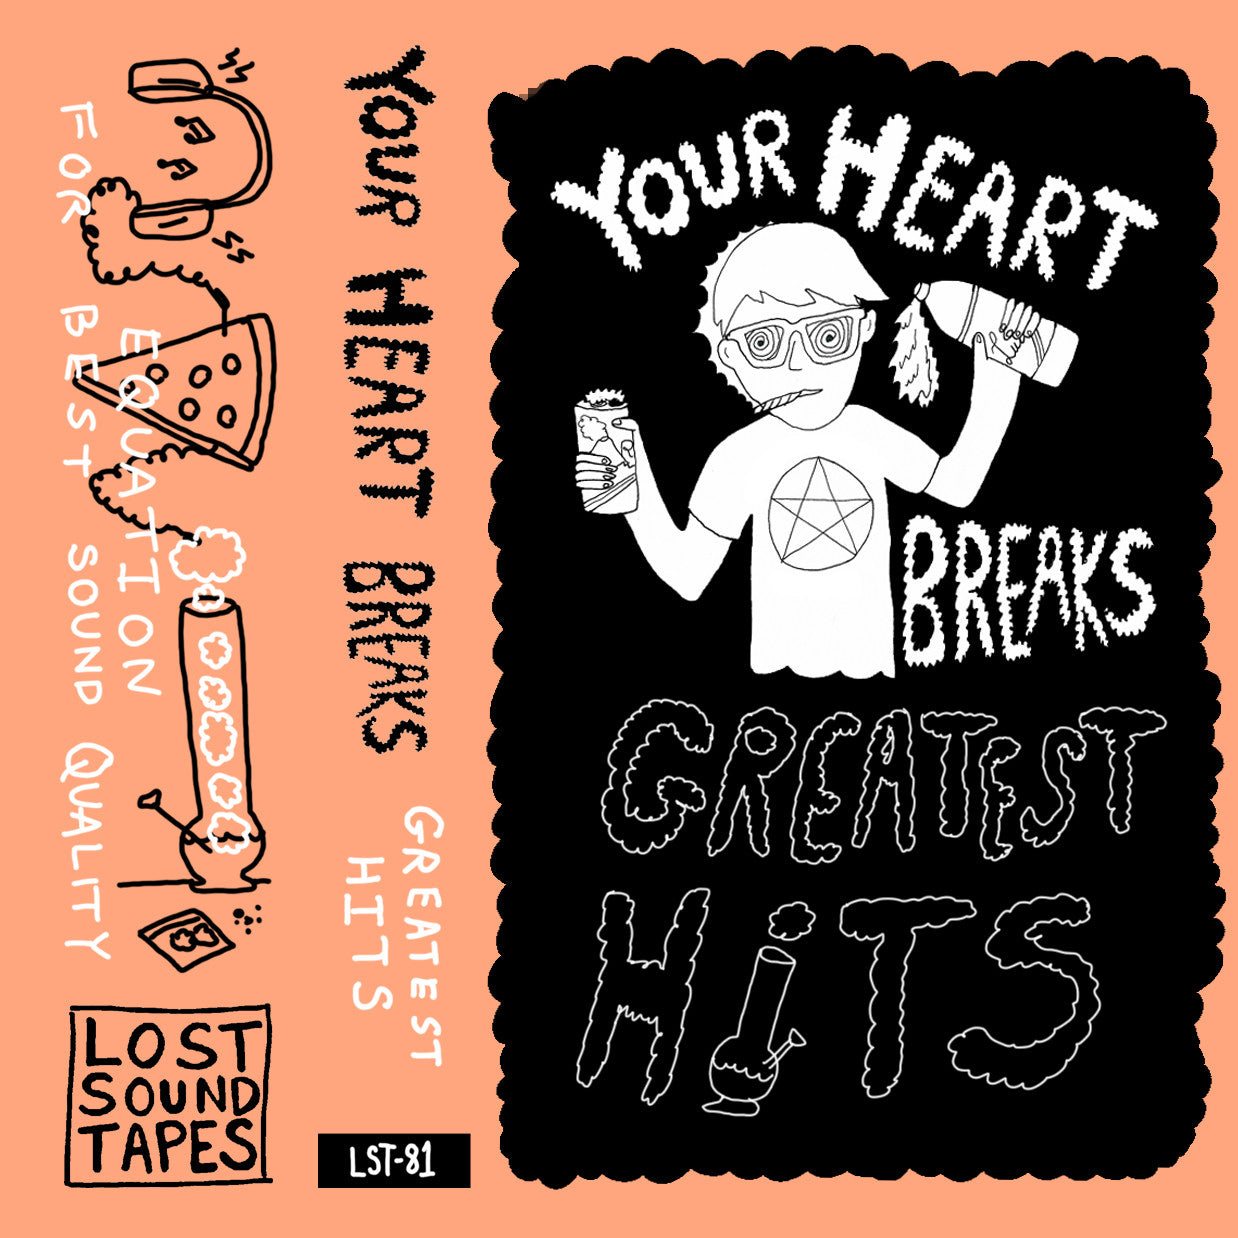 YOUR HEART BREAKS "Greatest Hits" cassette tape